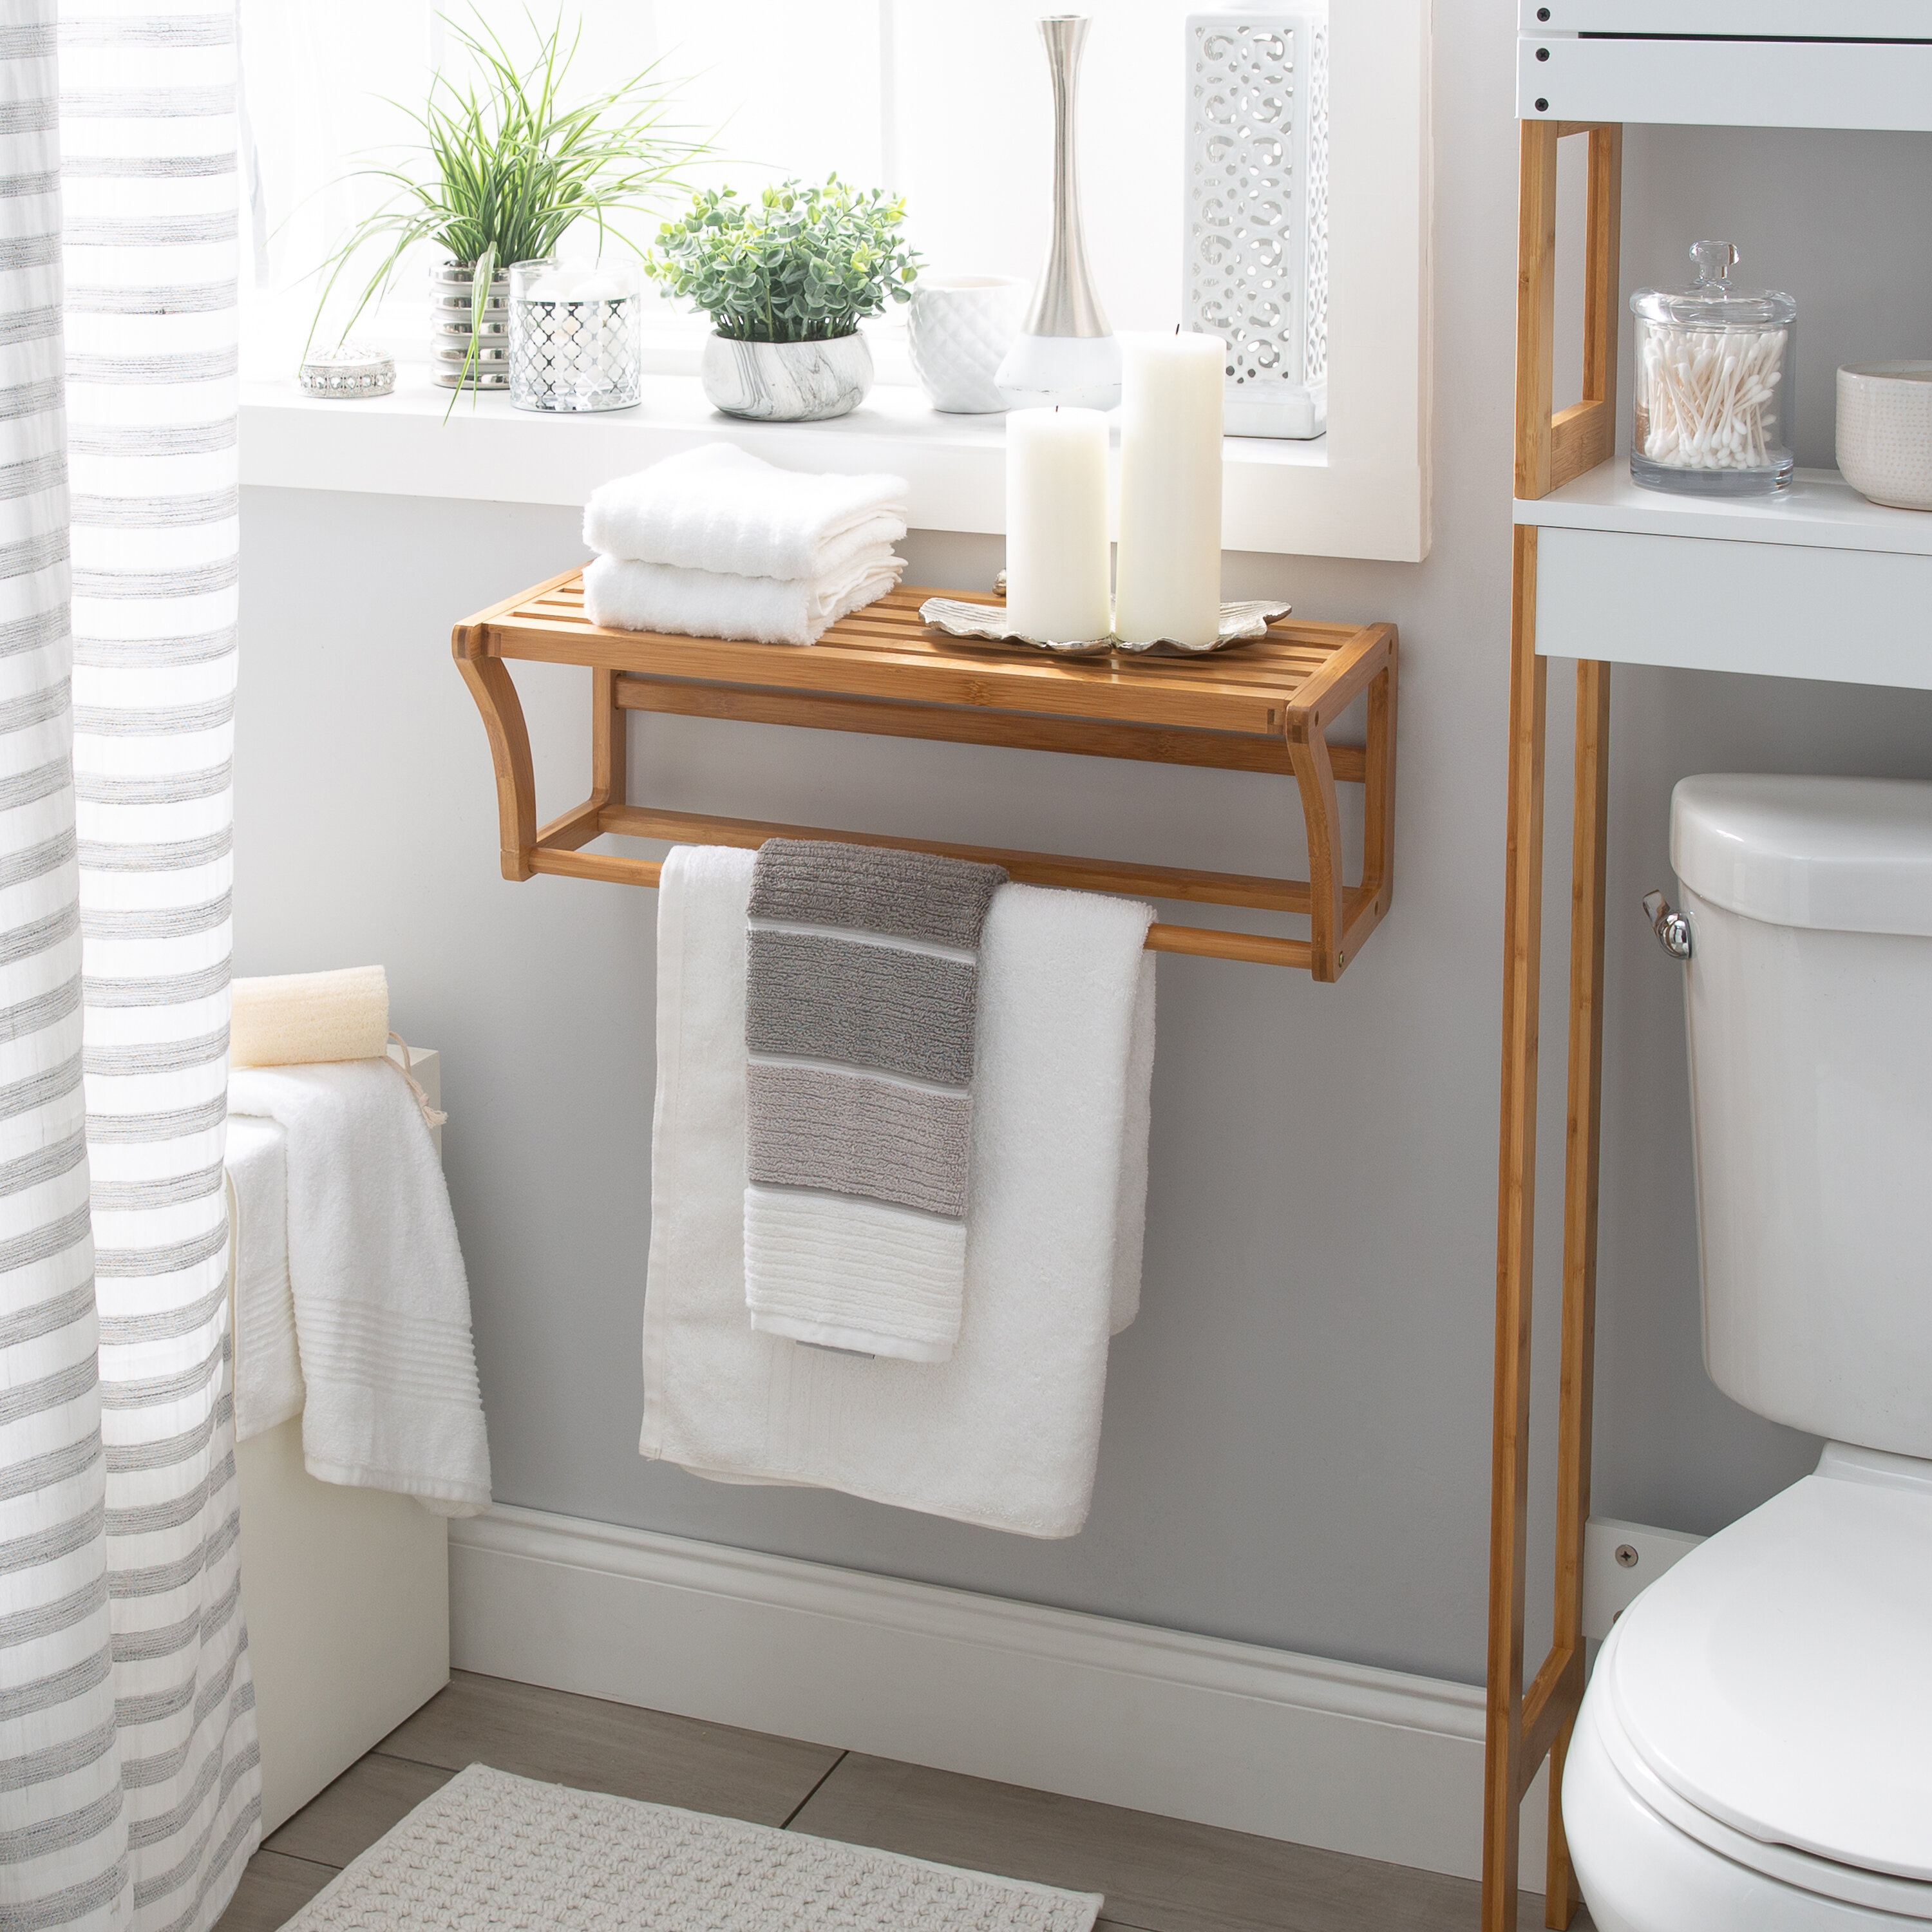 PINE FINISH BATHROOM FITTINGS Wooden Bathroom/ KITCHEN TOWEL RACK CLEARANCE 